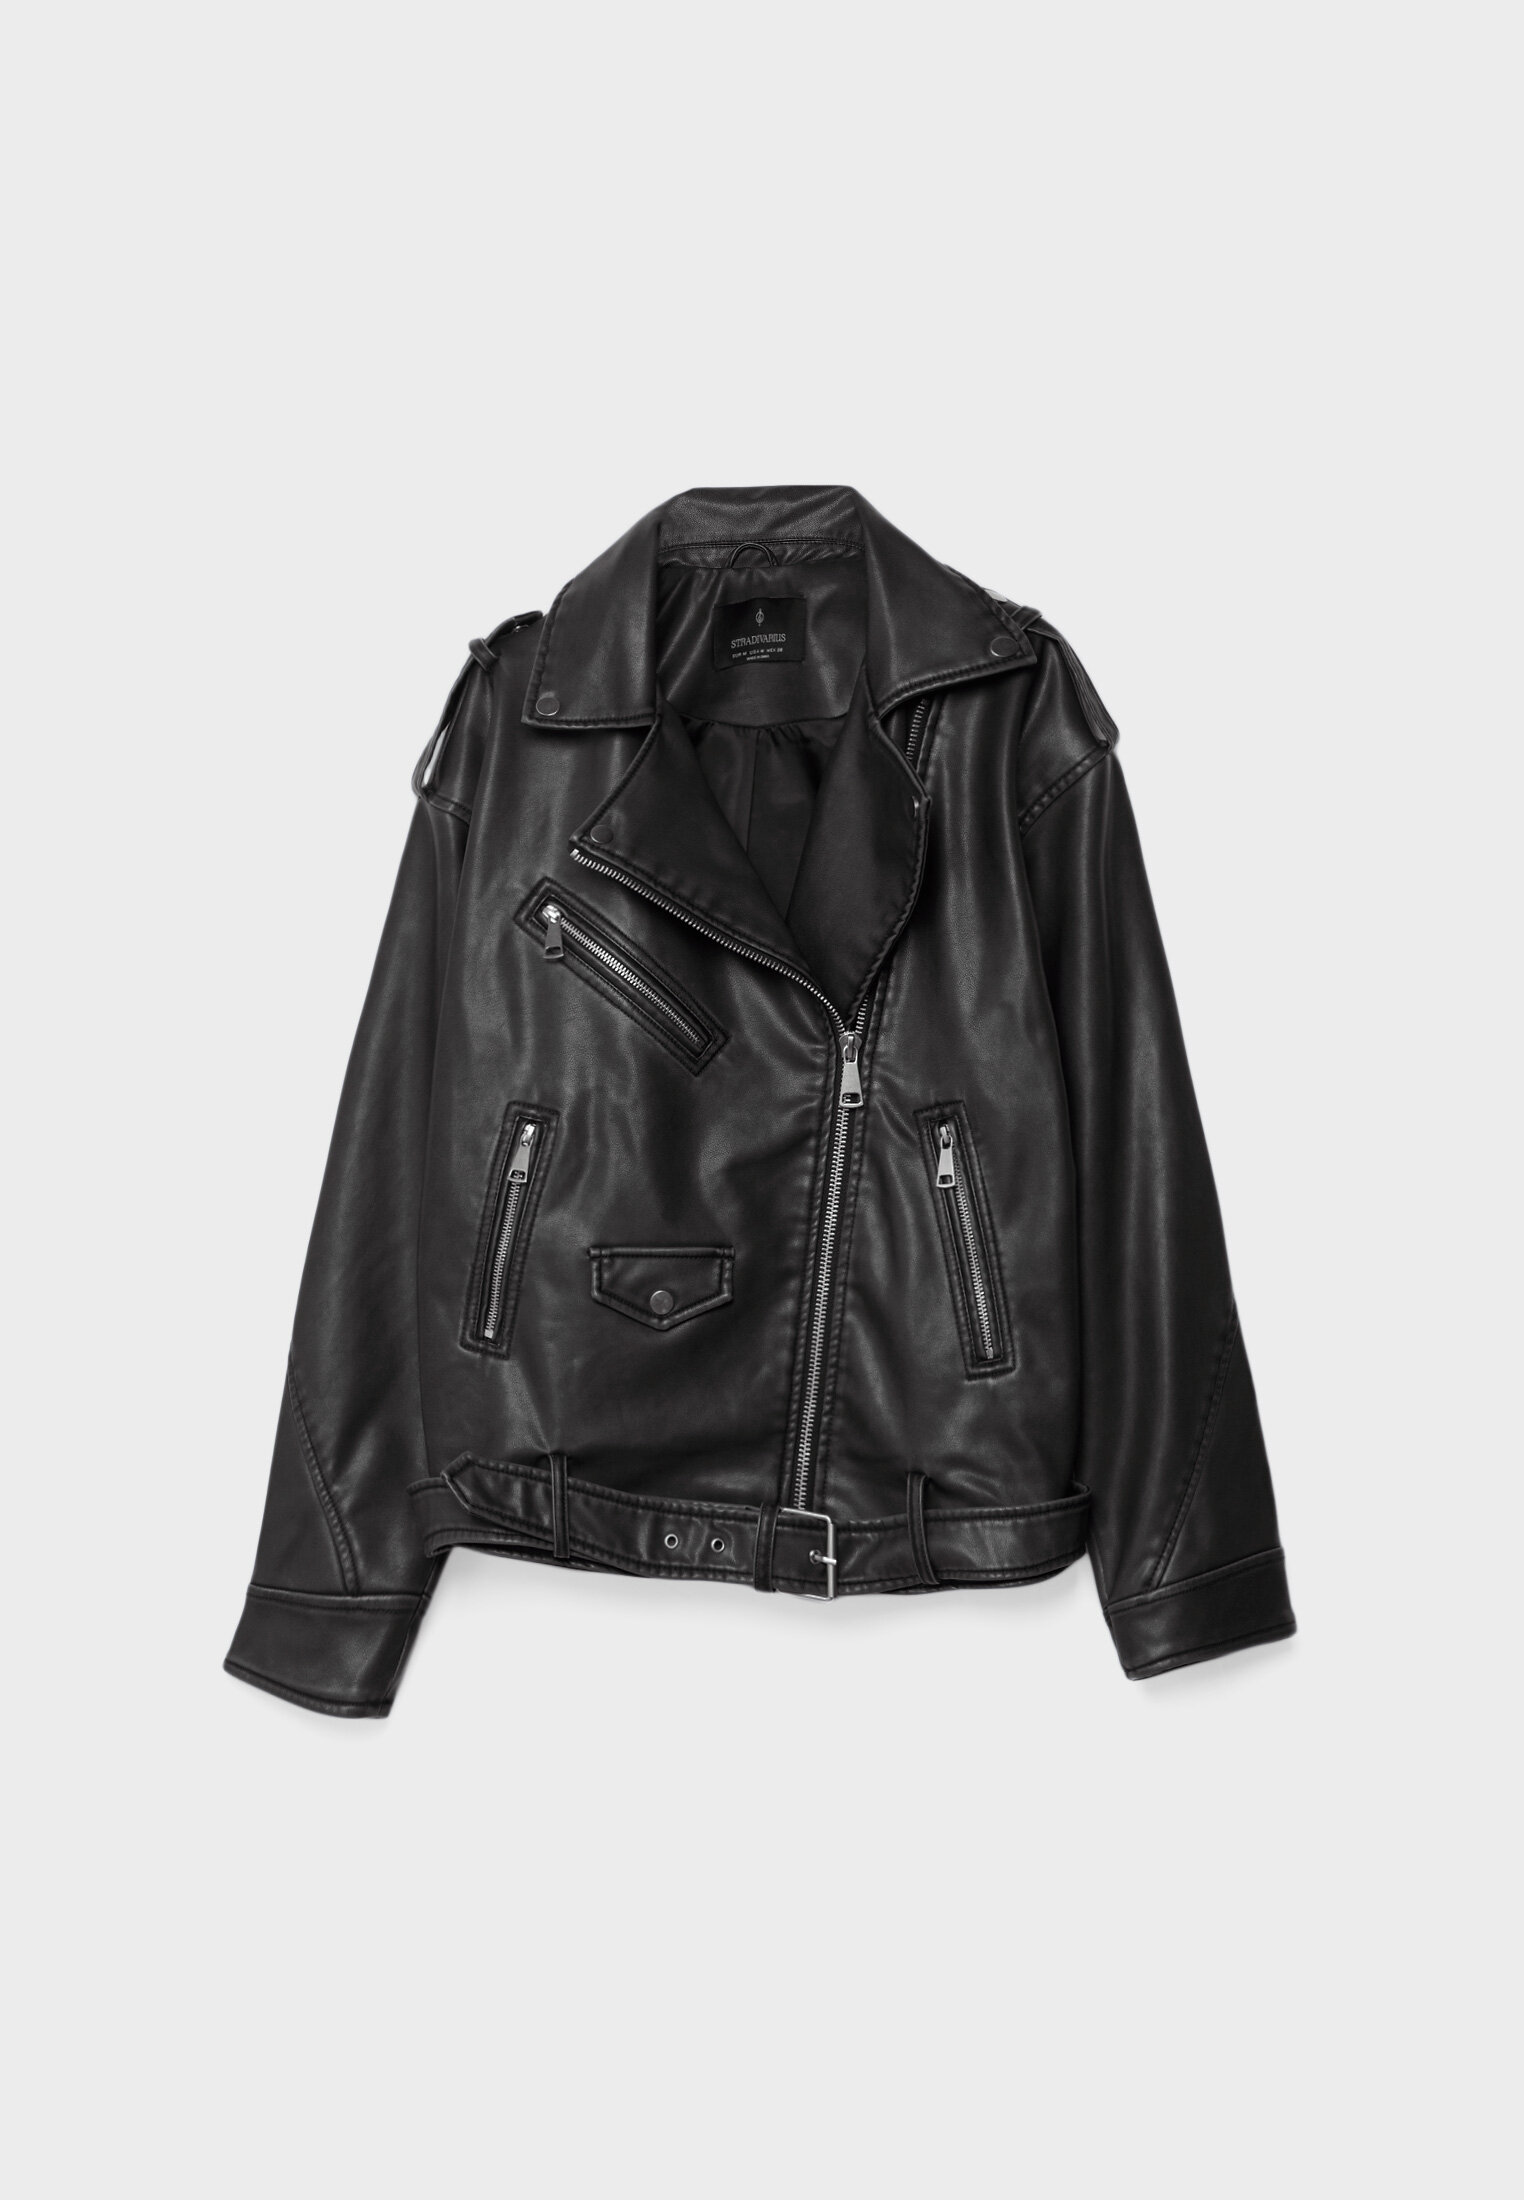 Long faux leather biker jacket - Women's fashion | Stradivarius